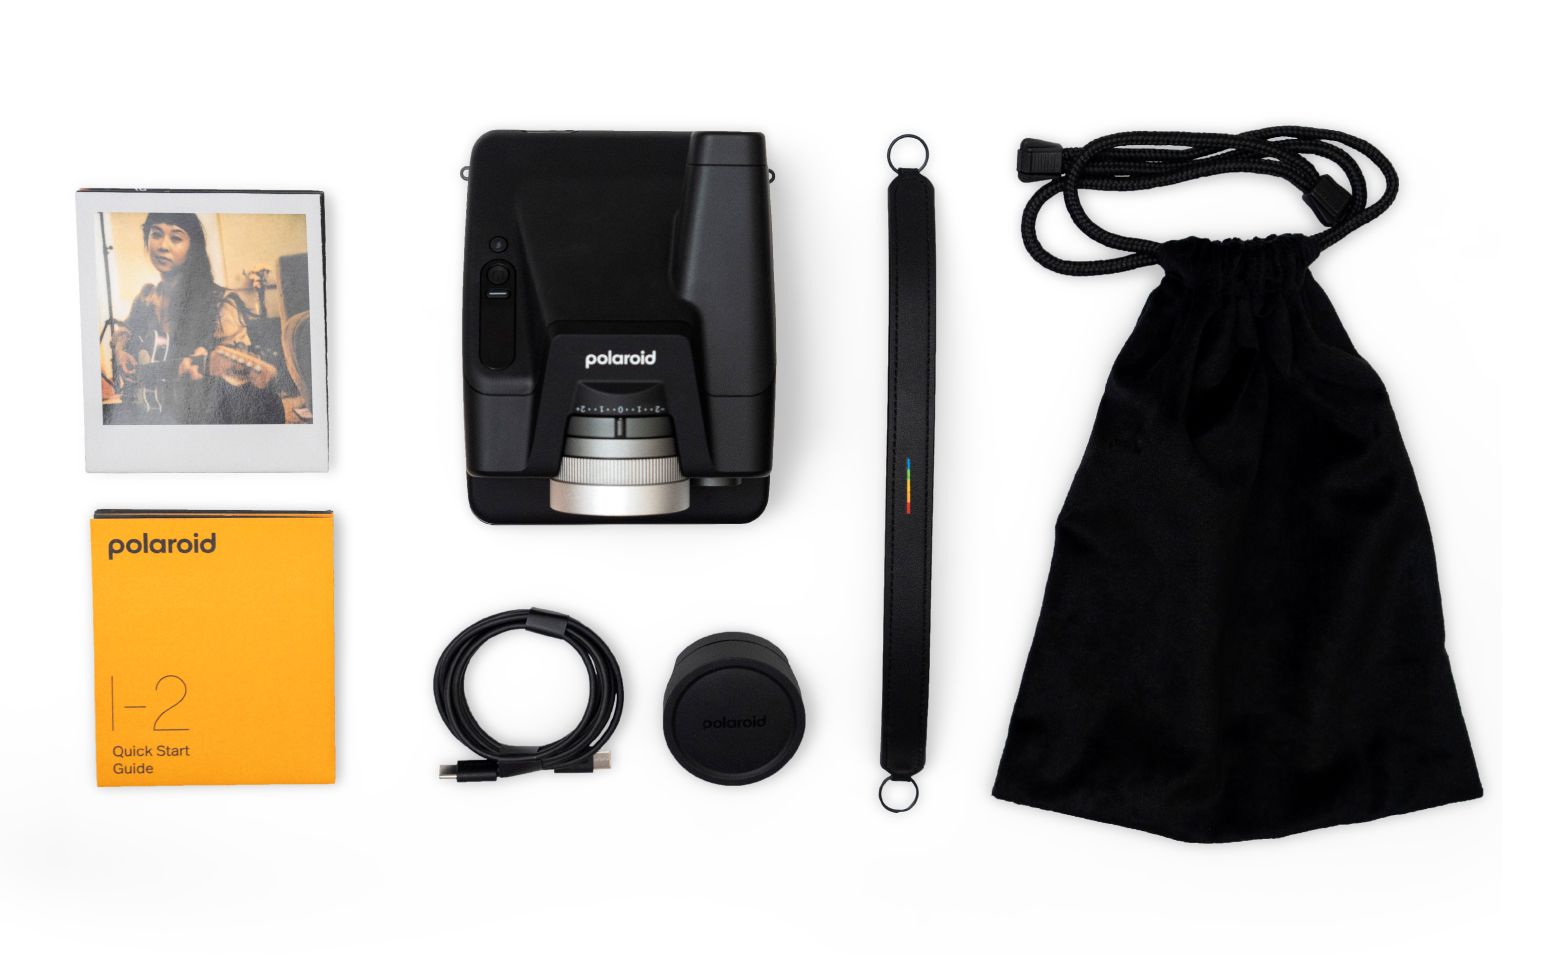 Discover the Polaroid I-2 Instant Camera